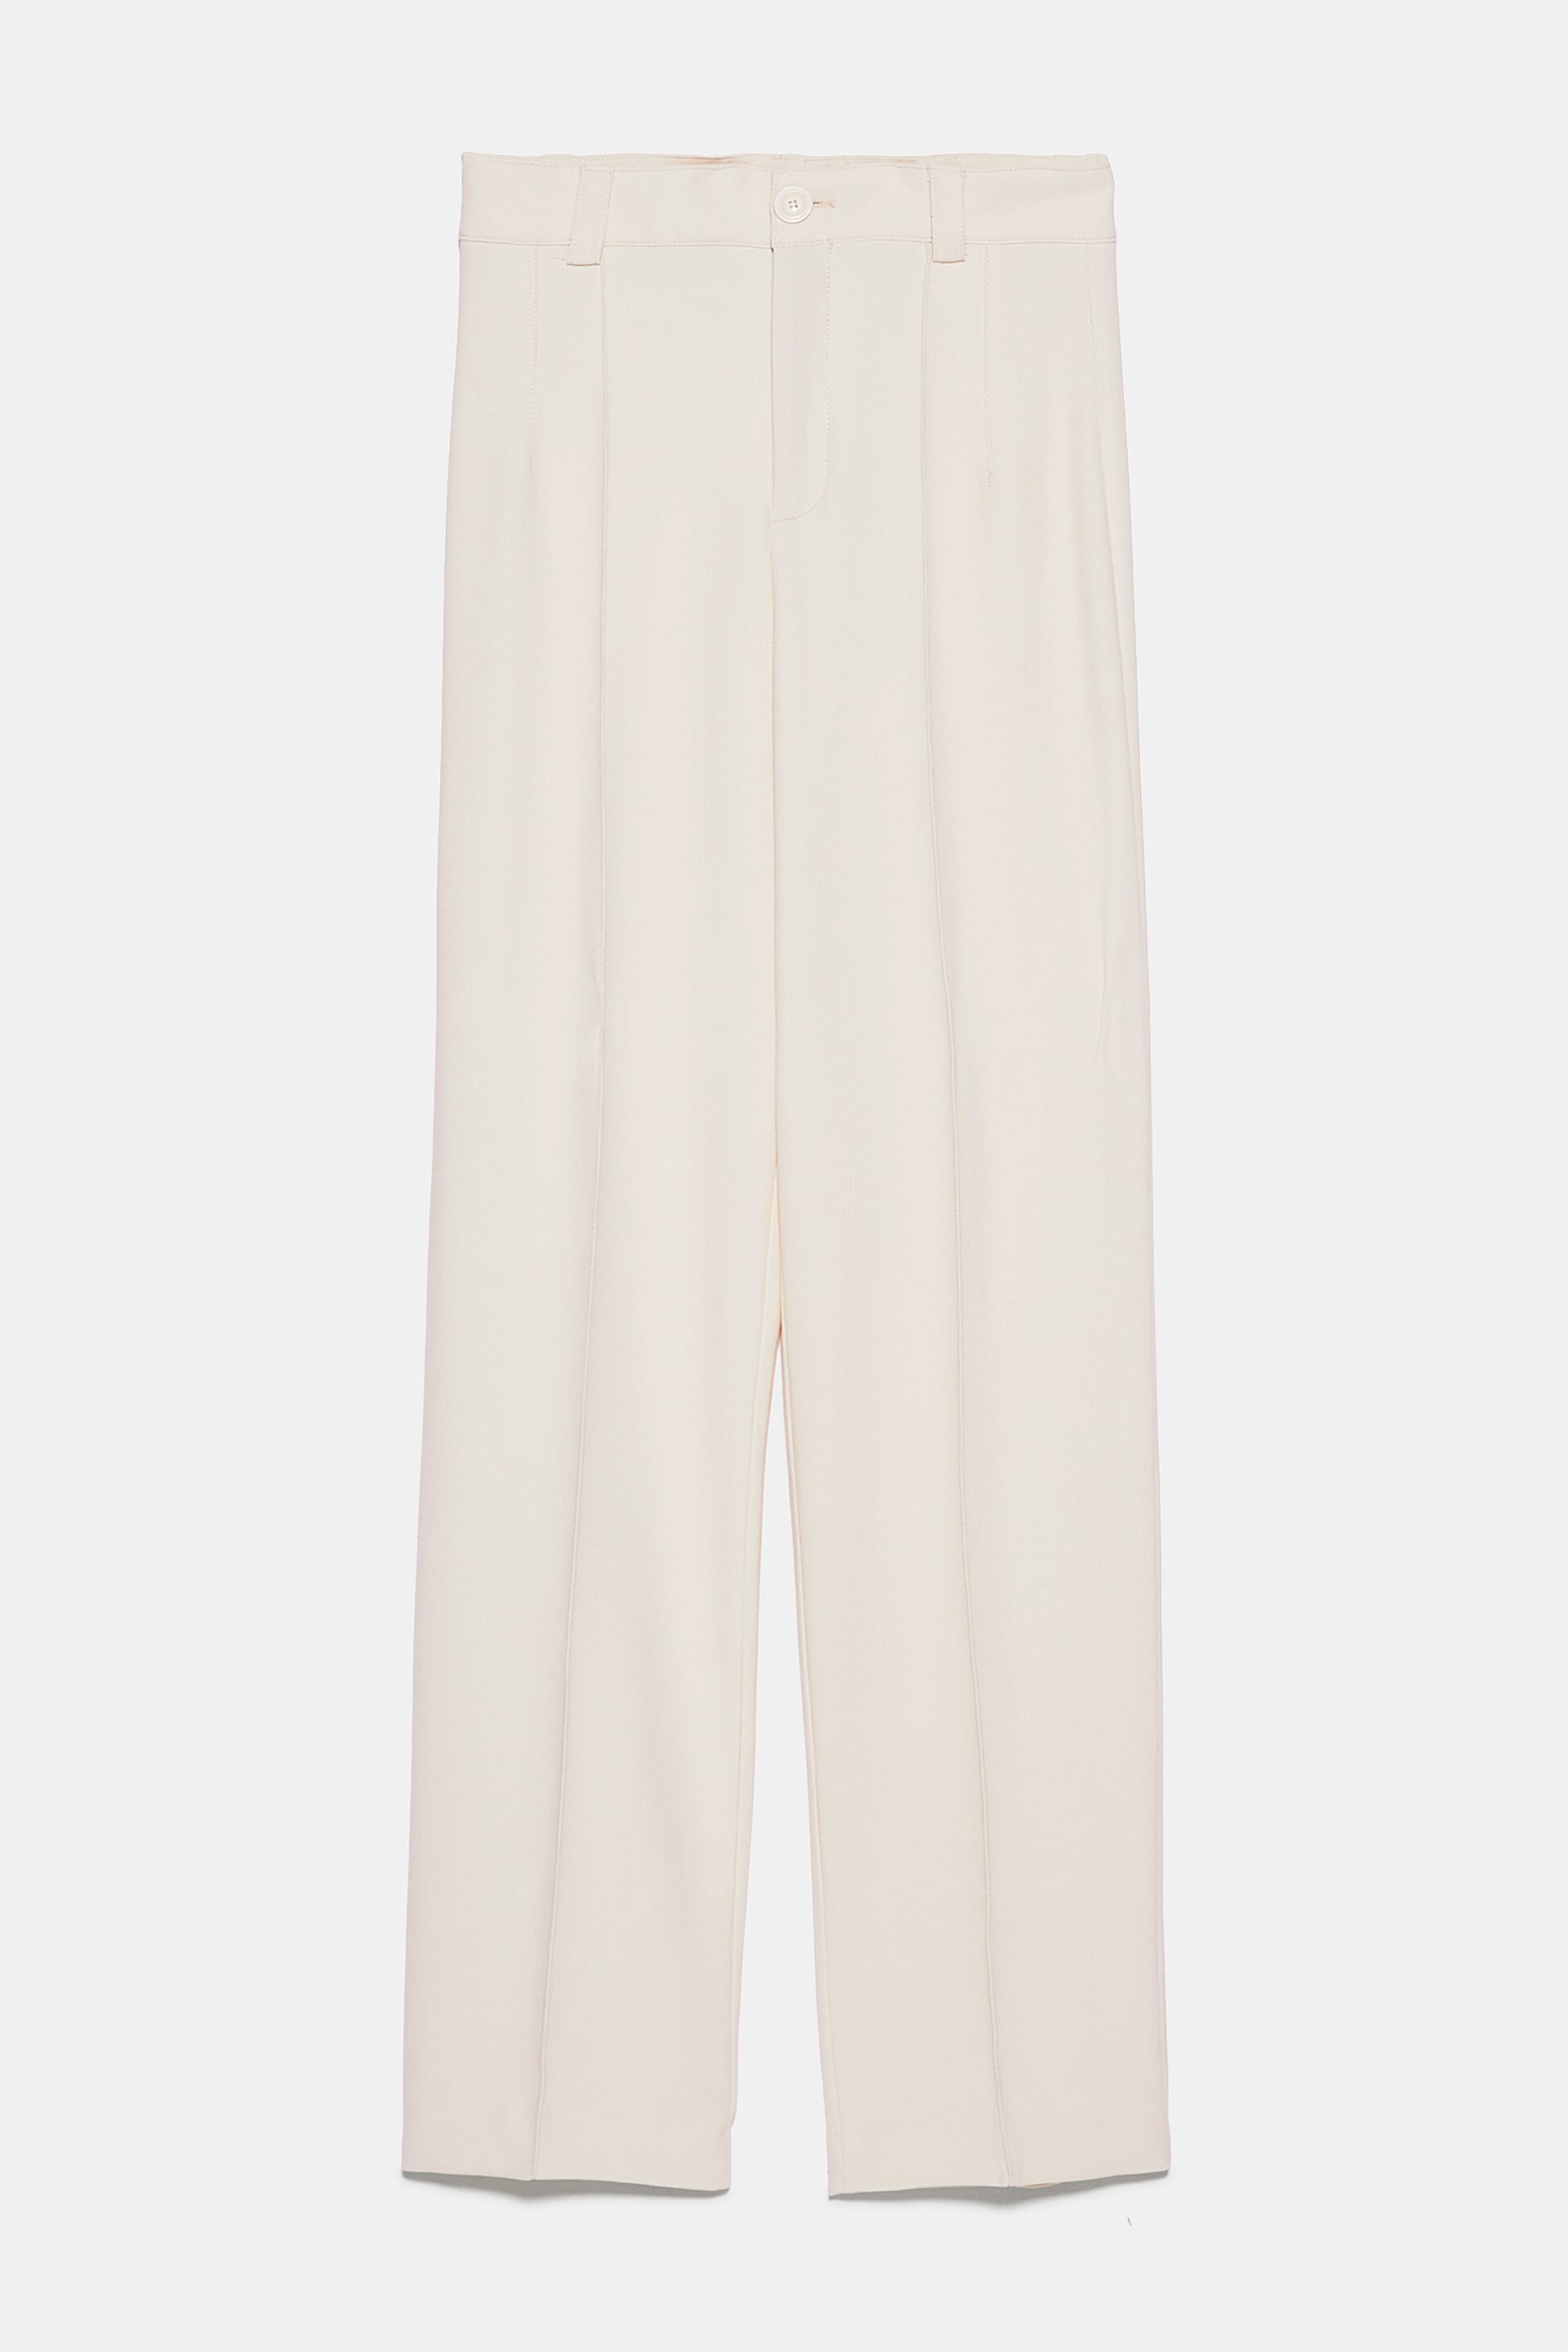 Zara white suit trousers.jpg